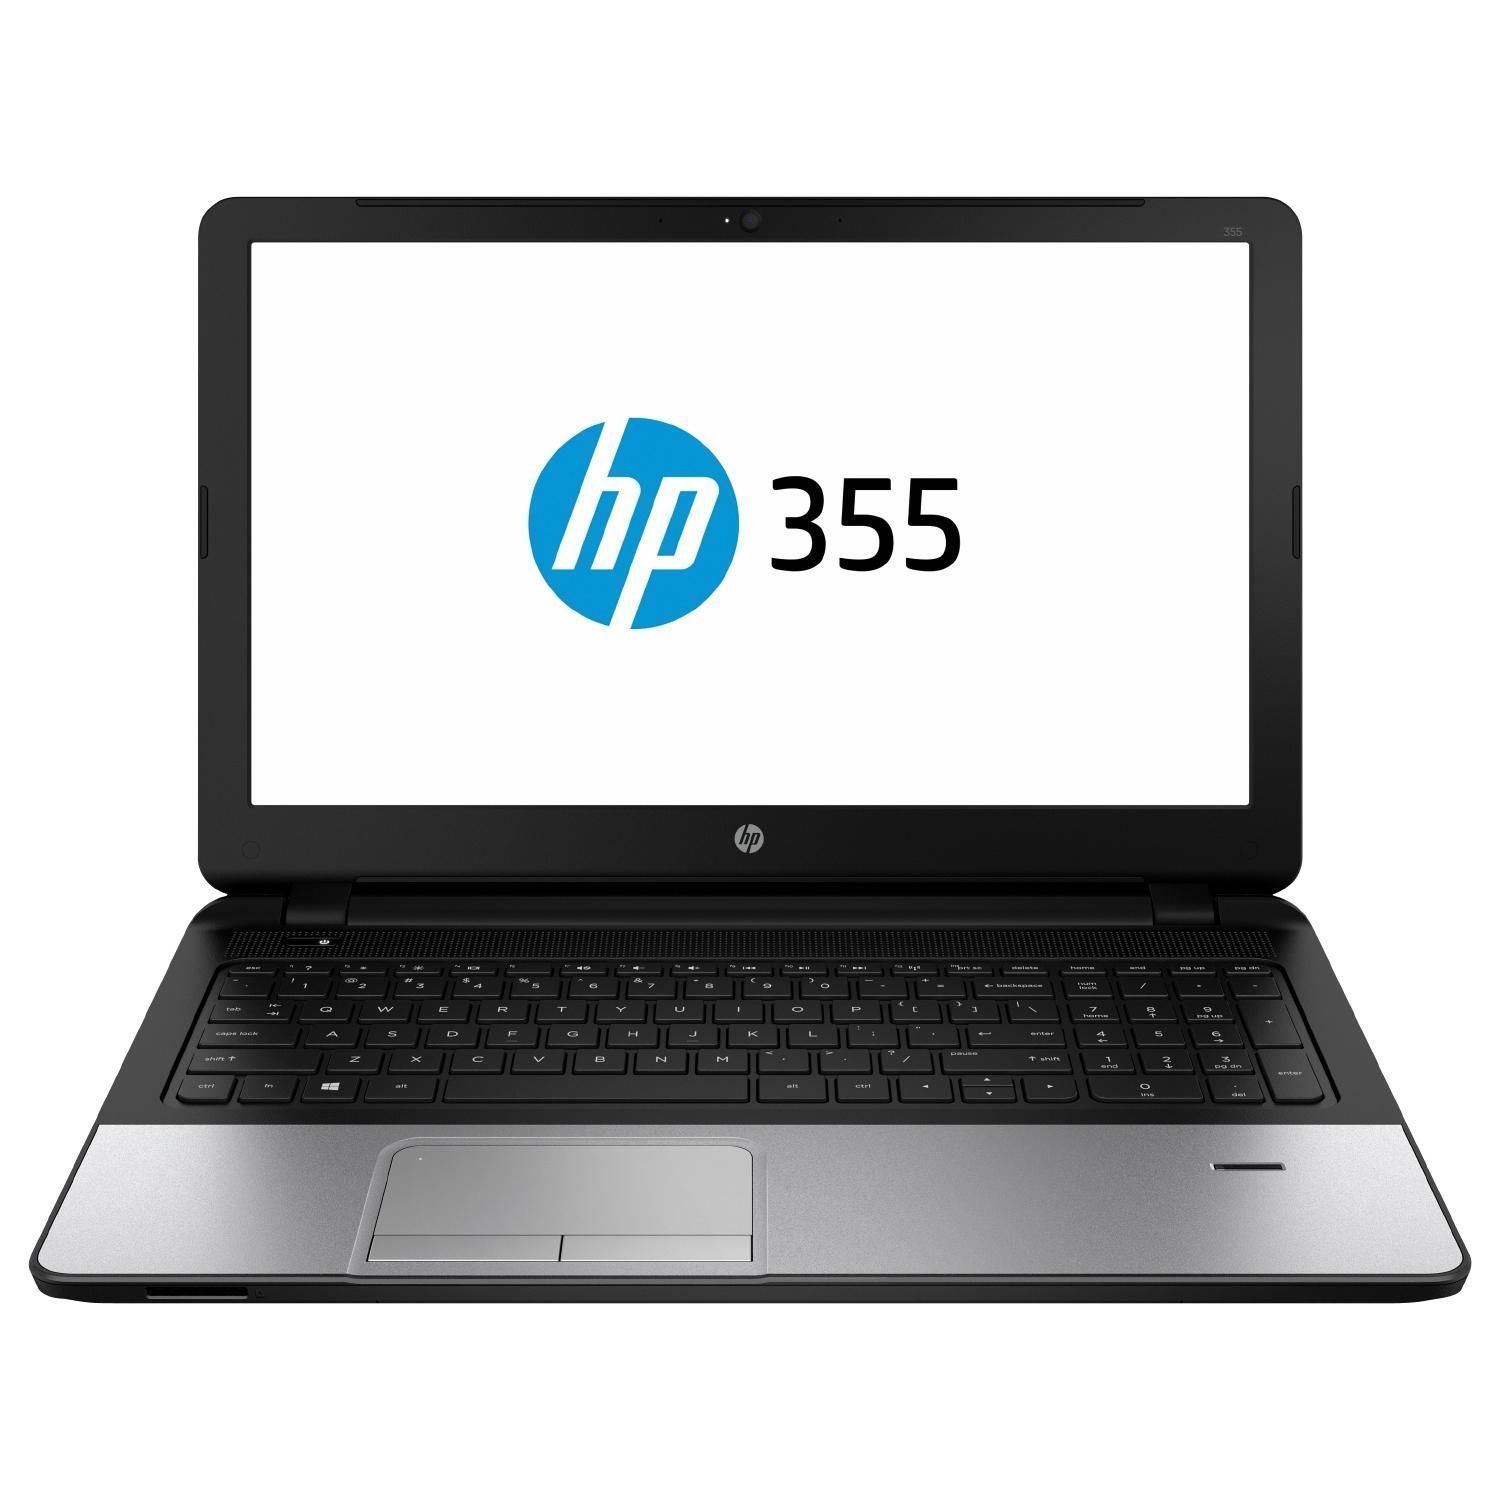 HP Gaming Laptop Quad Core / 4GB / 1TB HDD / Radeon R5 240M 2GB / Bluetooth USB3